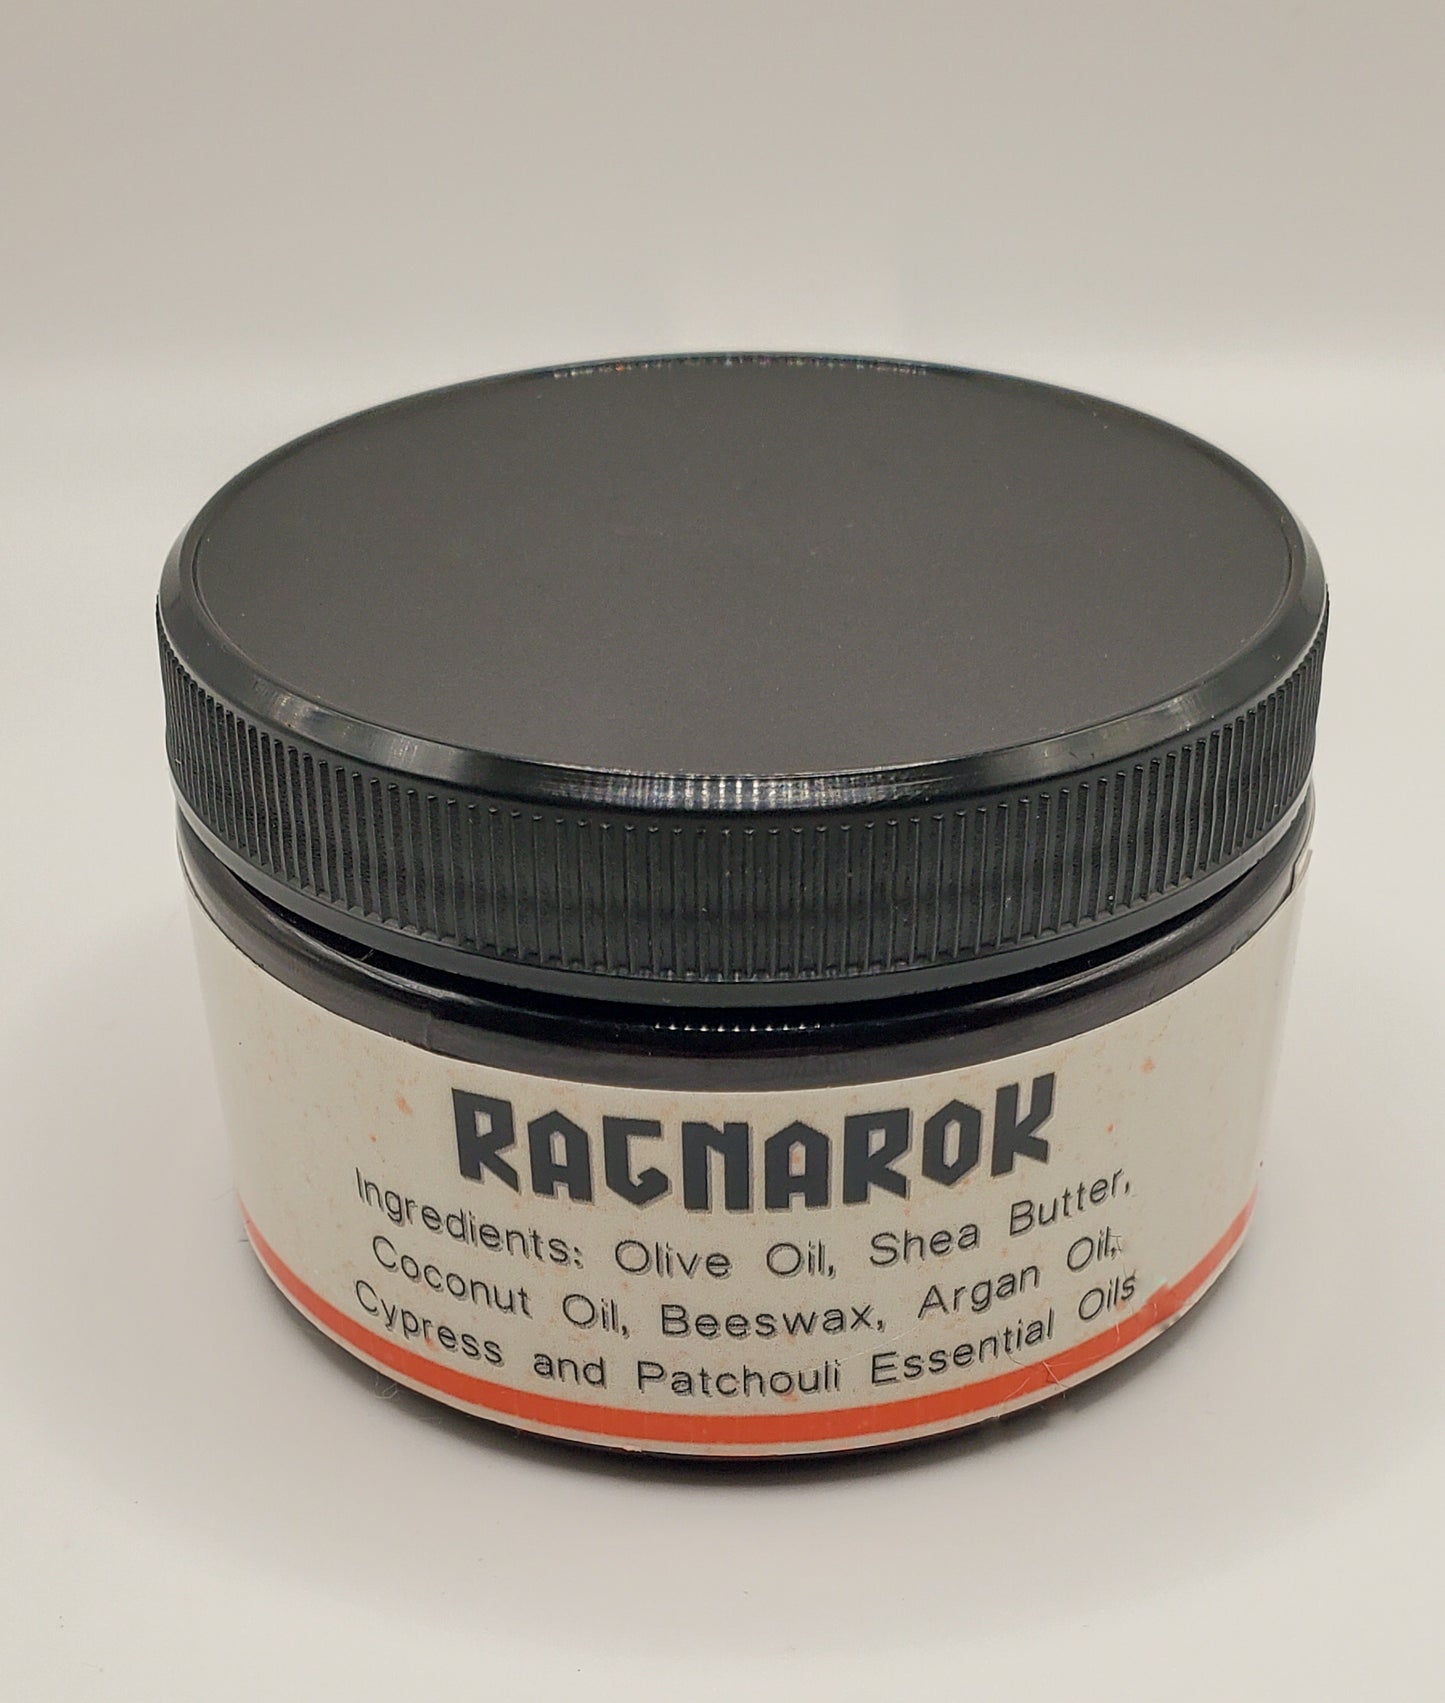 Ragnarok Beard Care Kit // Cypress Patchouli Beard Care Products